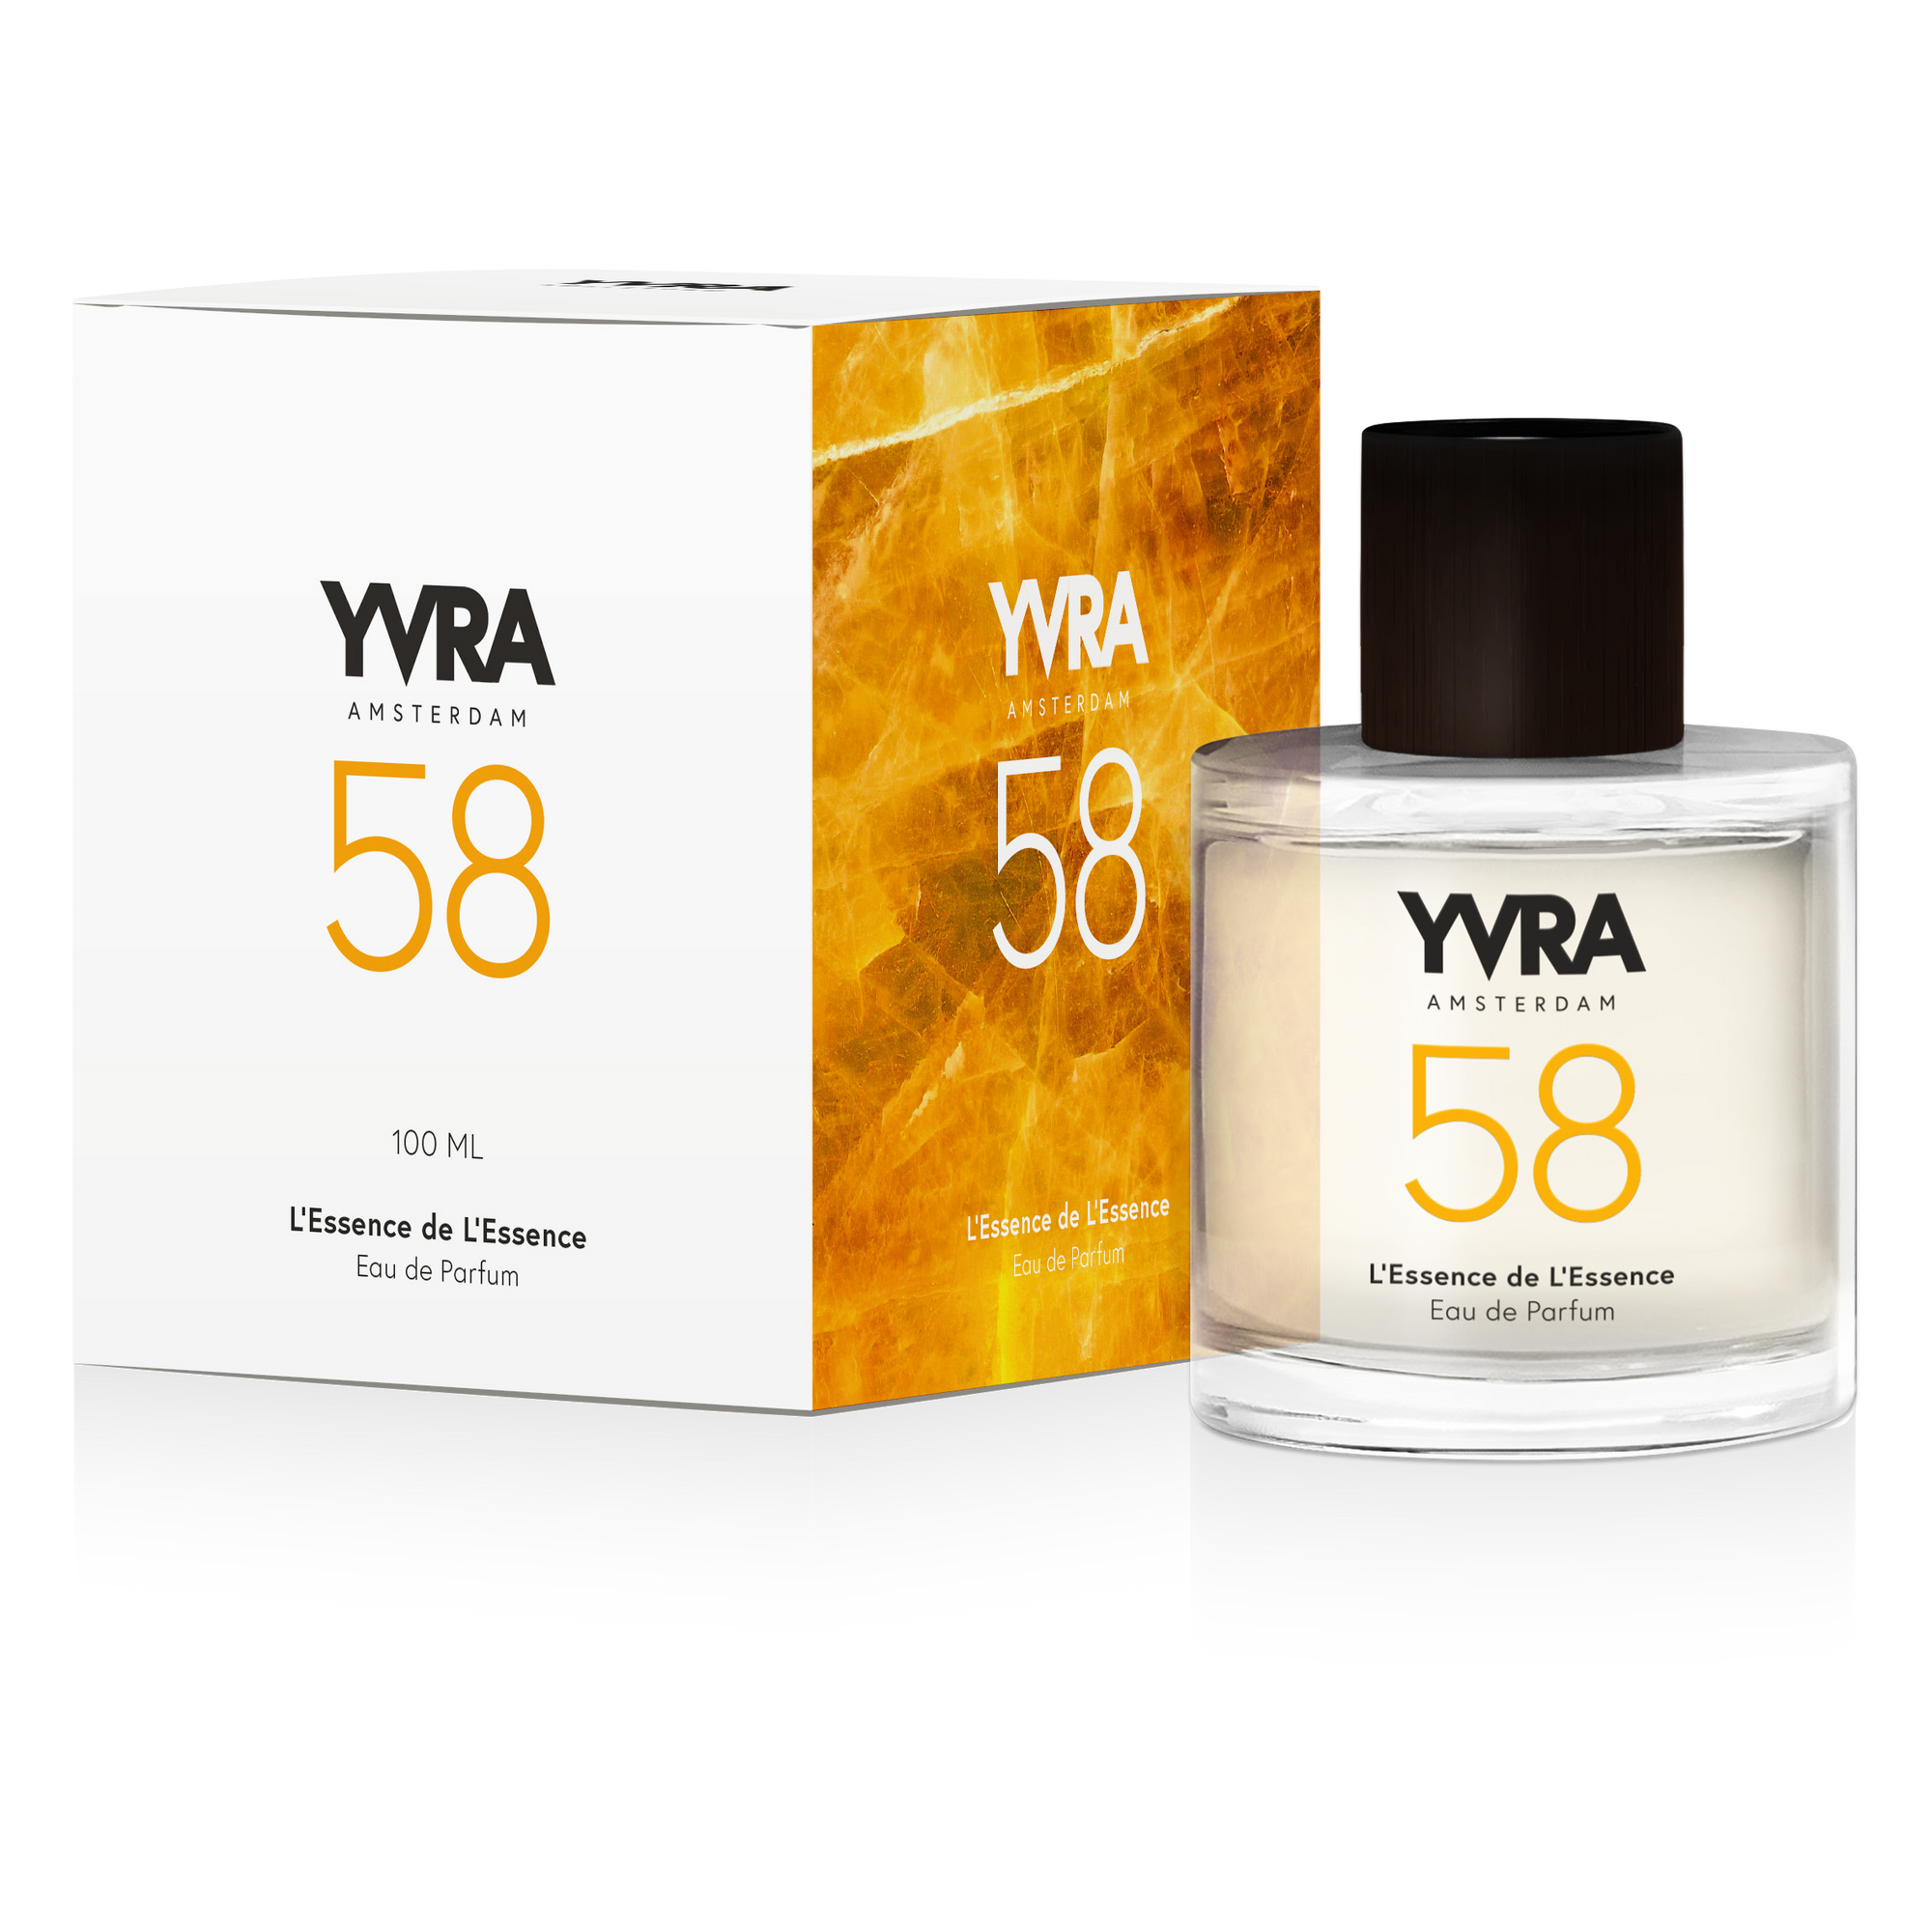 YVRA - L'Essence de L'Essence | Parfum